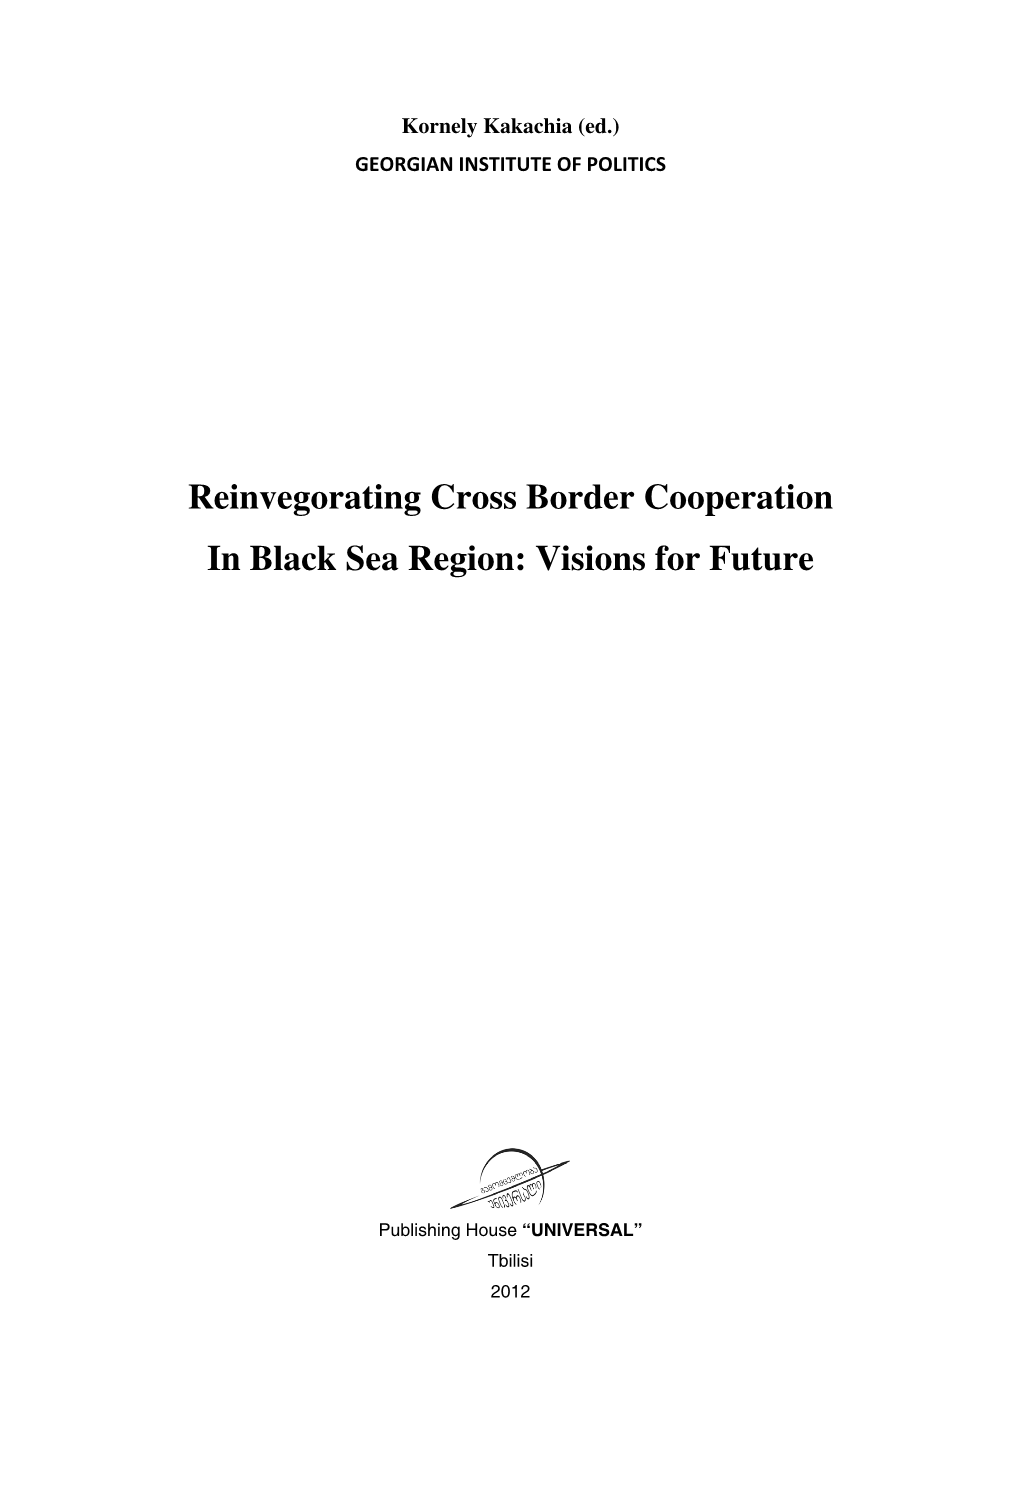 Reinvegorating Cross Border Cooperation in Black Sea Region: Visions for Future